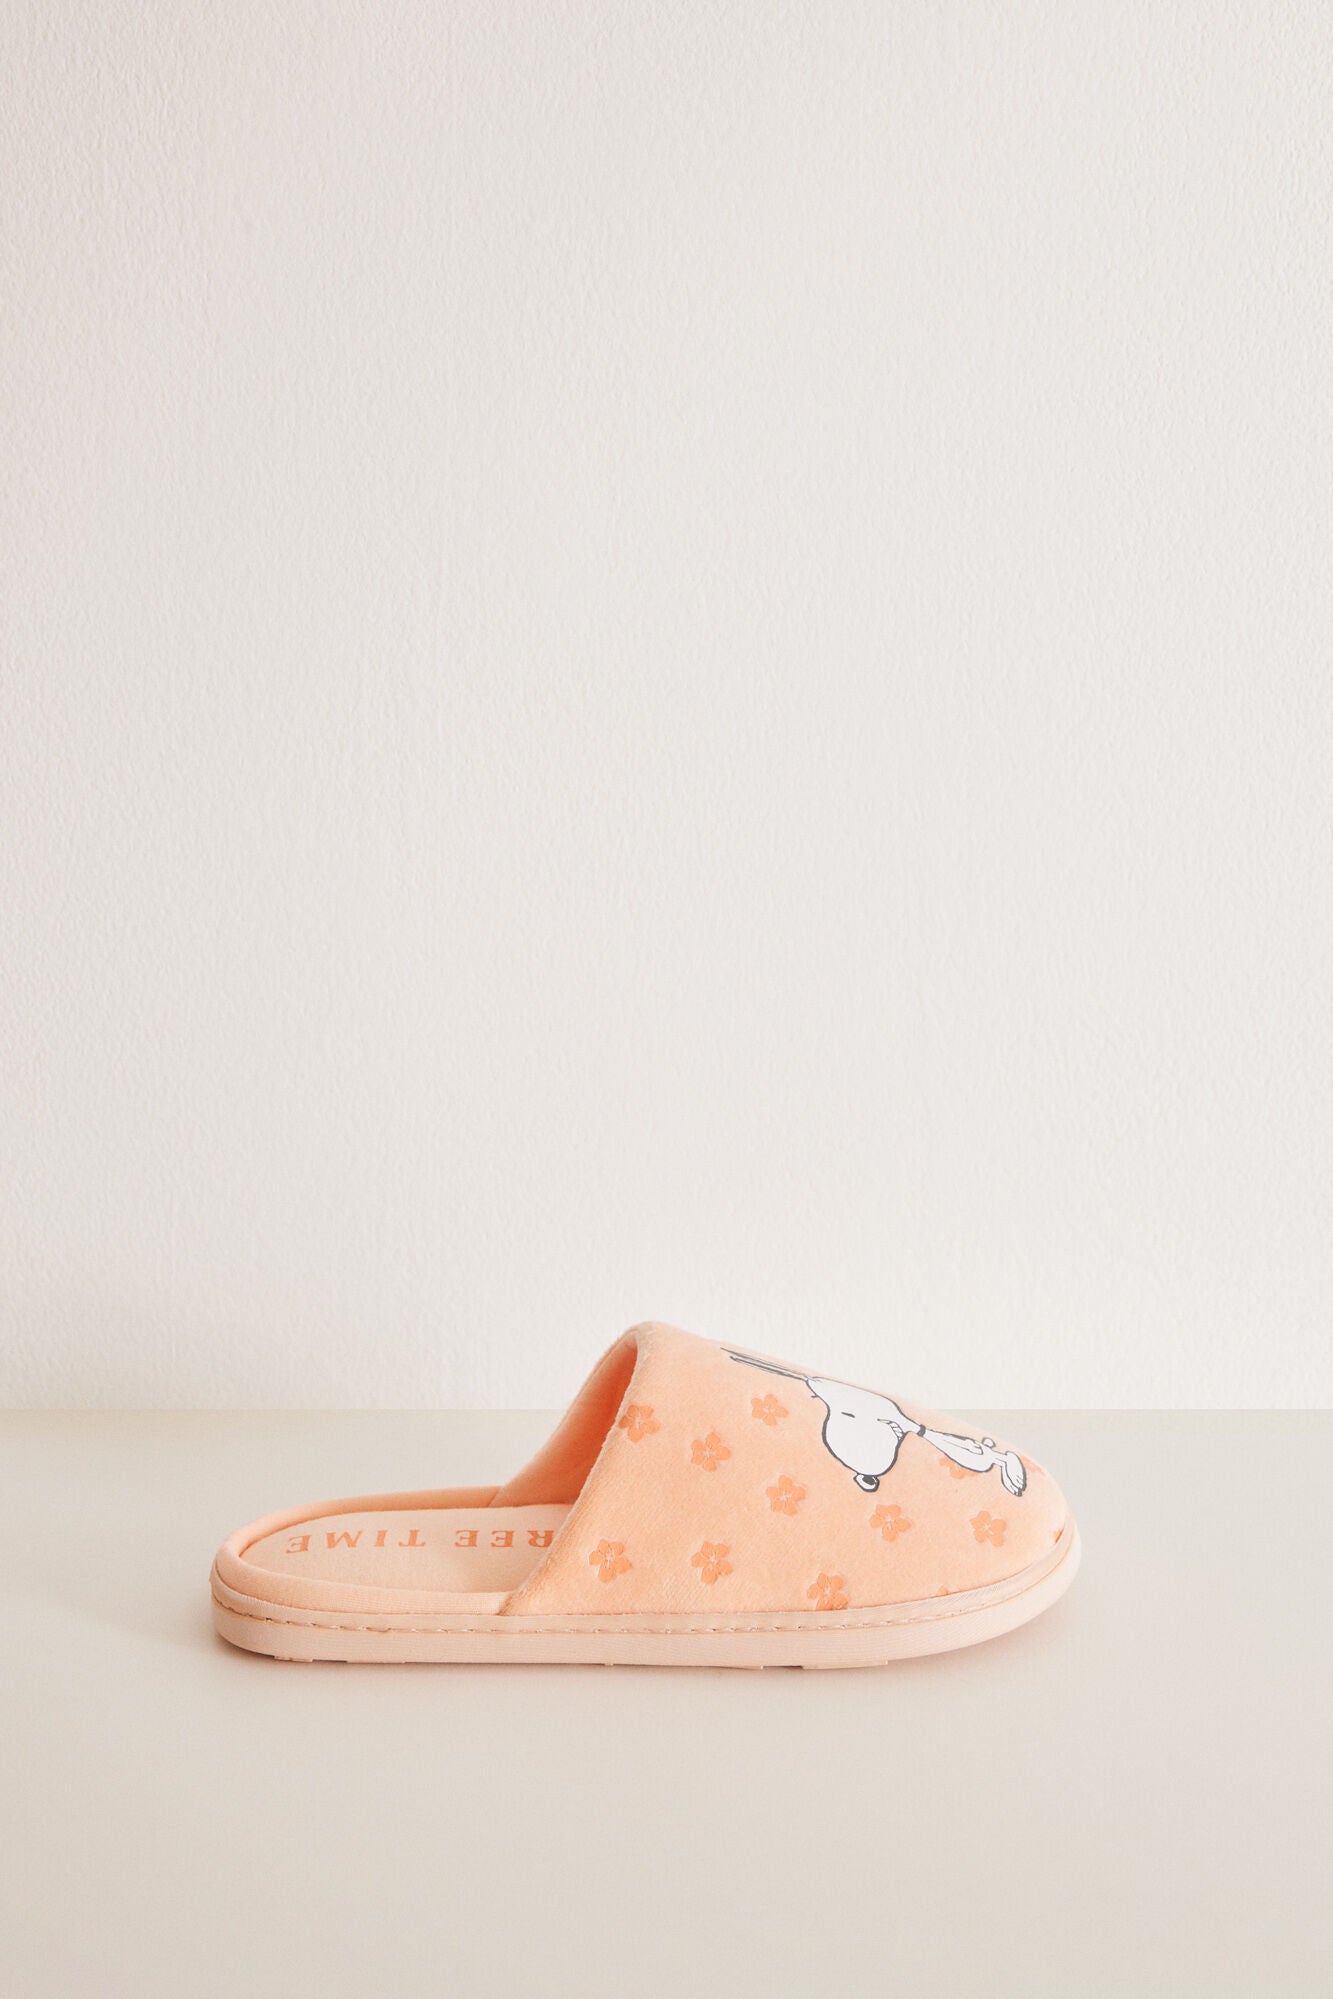 Snoopy orange house slippers